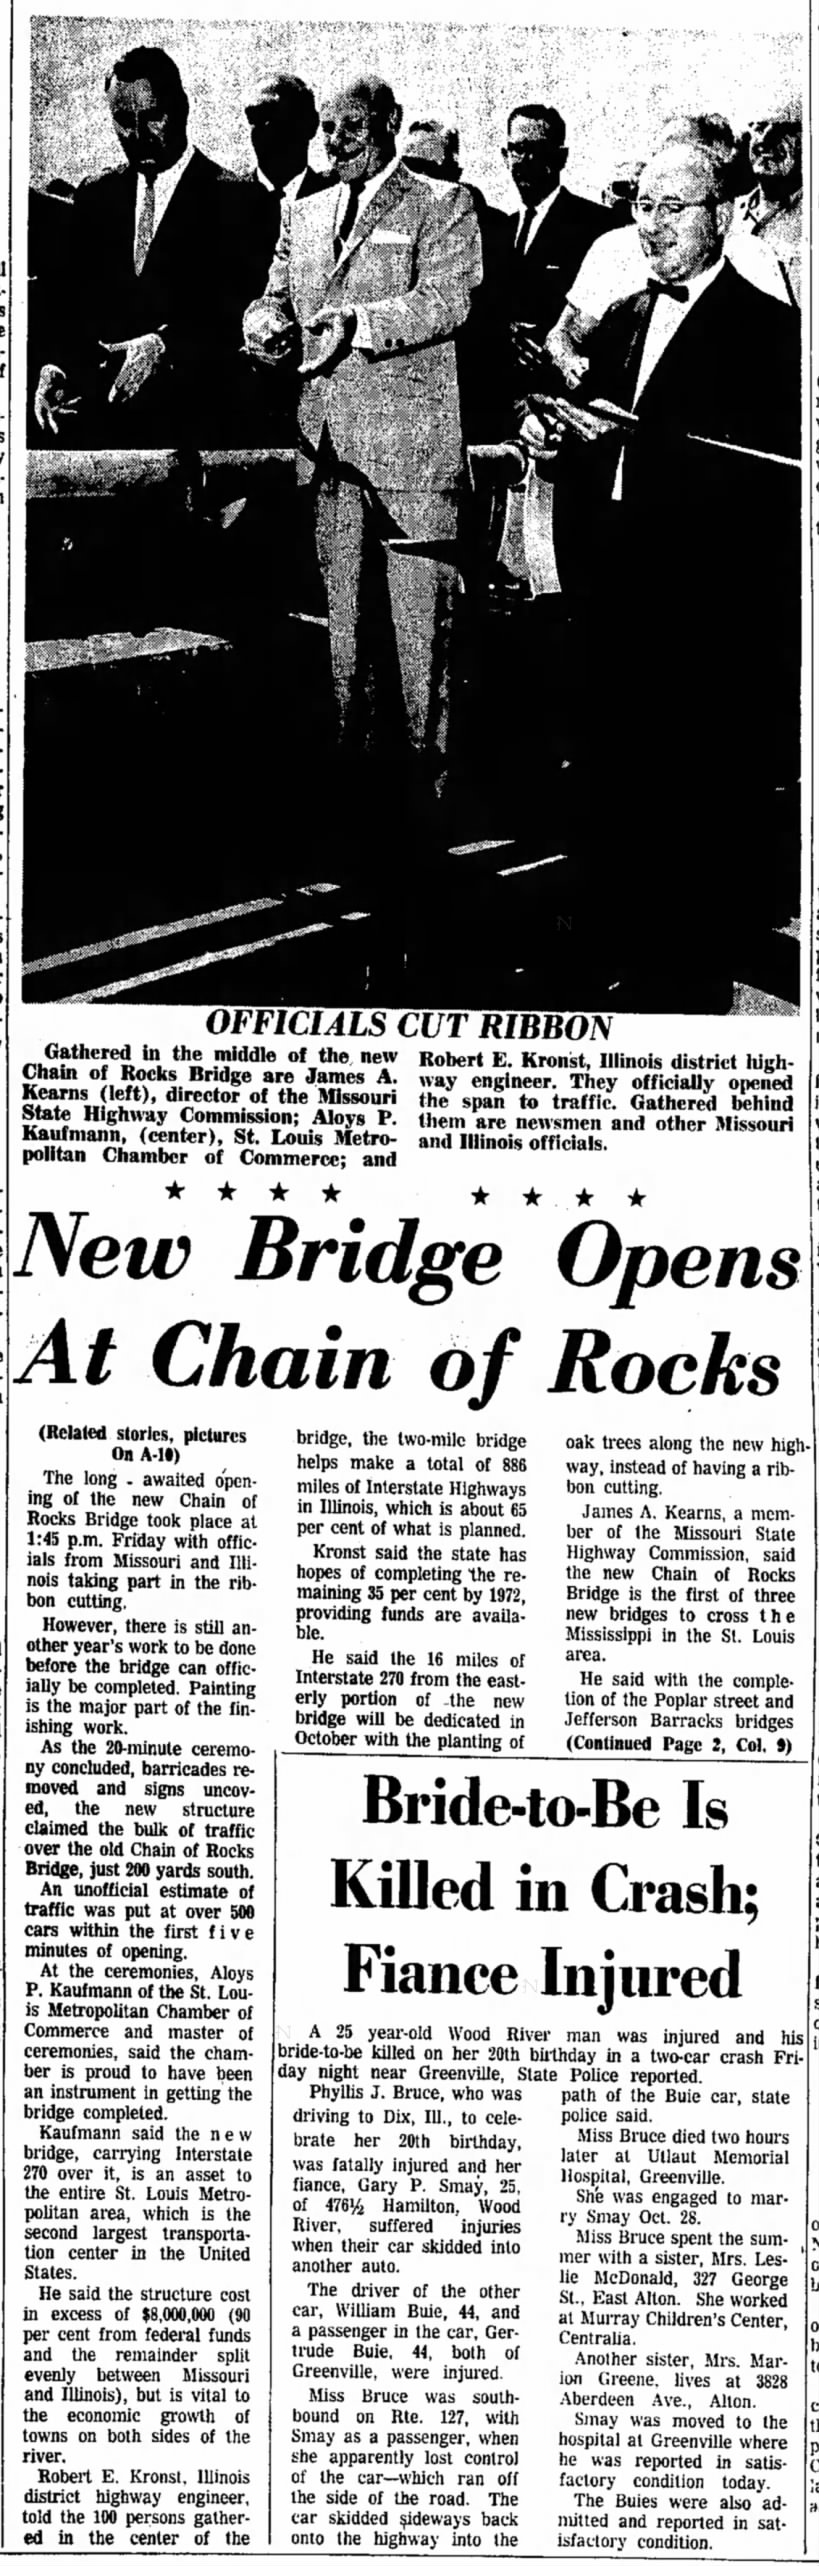 New Bridge Opens At Chain of Rocks